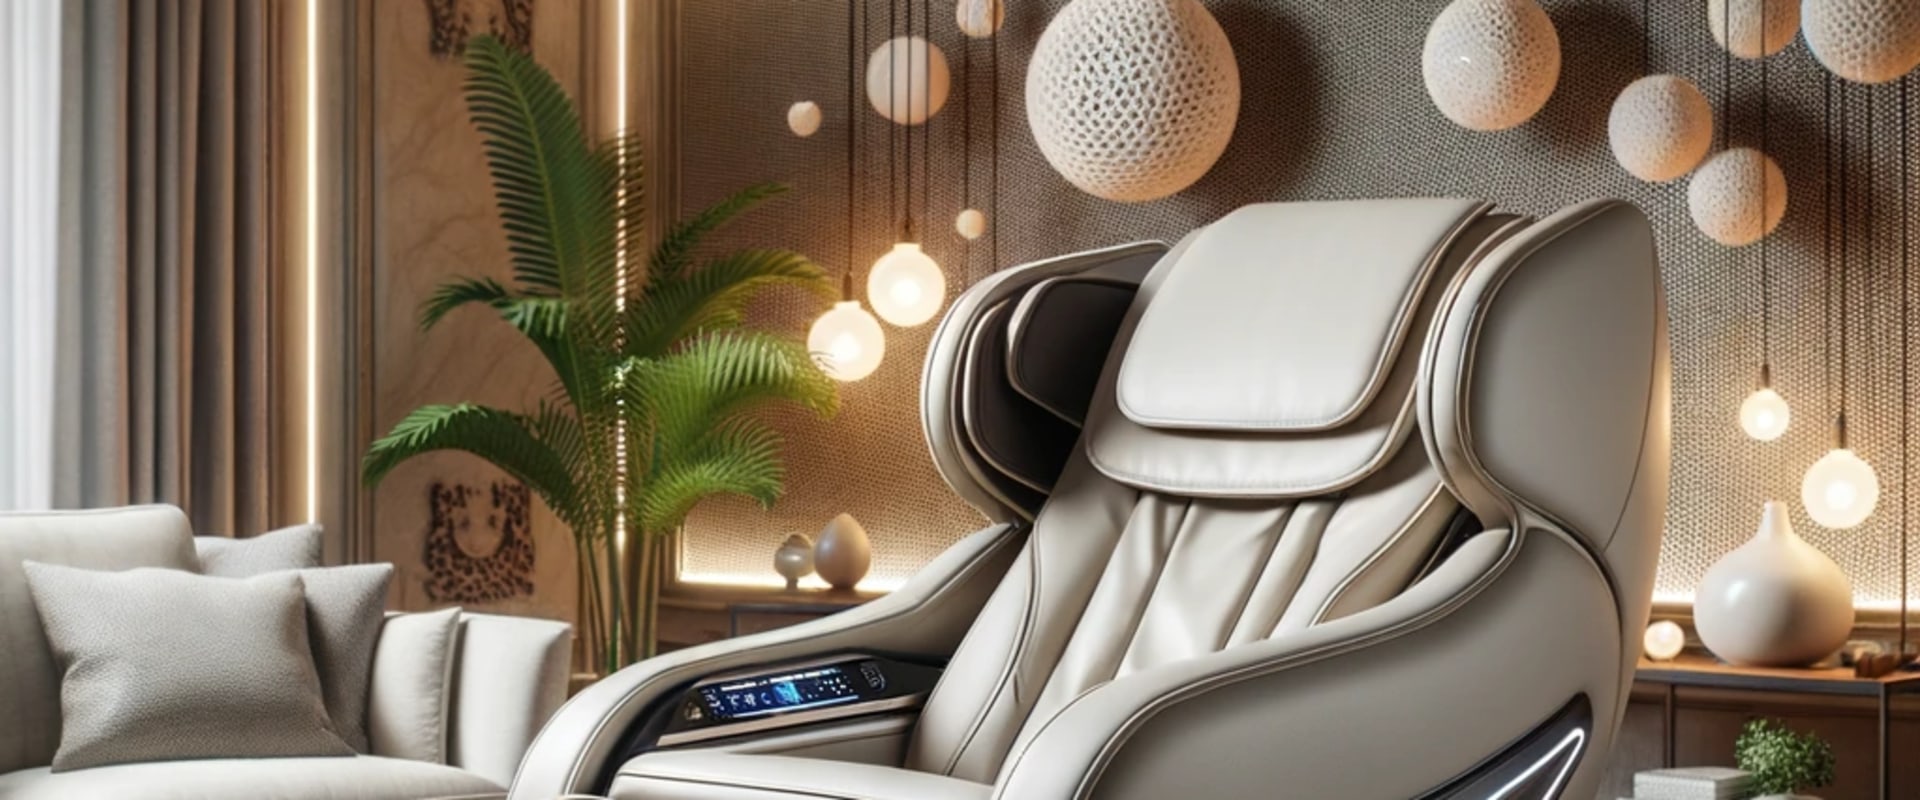 Zero Gravity Massage Chairs: The Pinnacle of Relaxation Technology